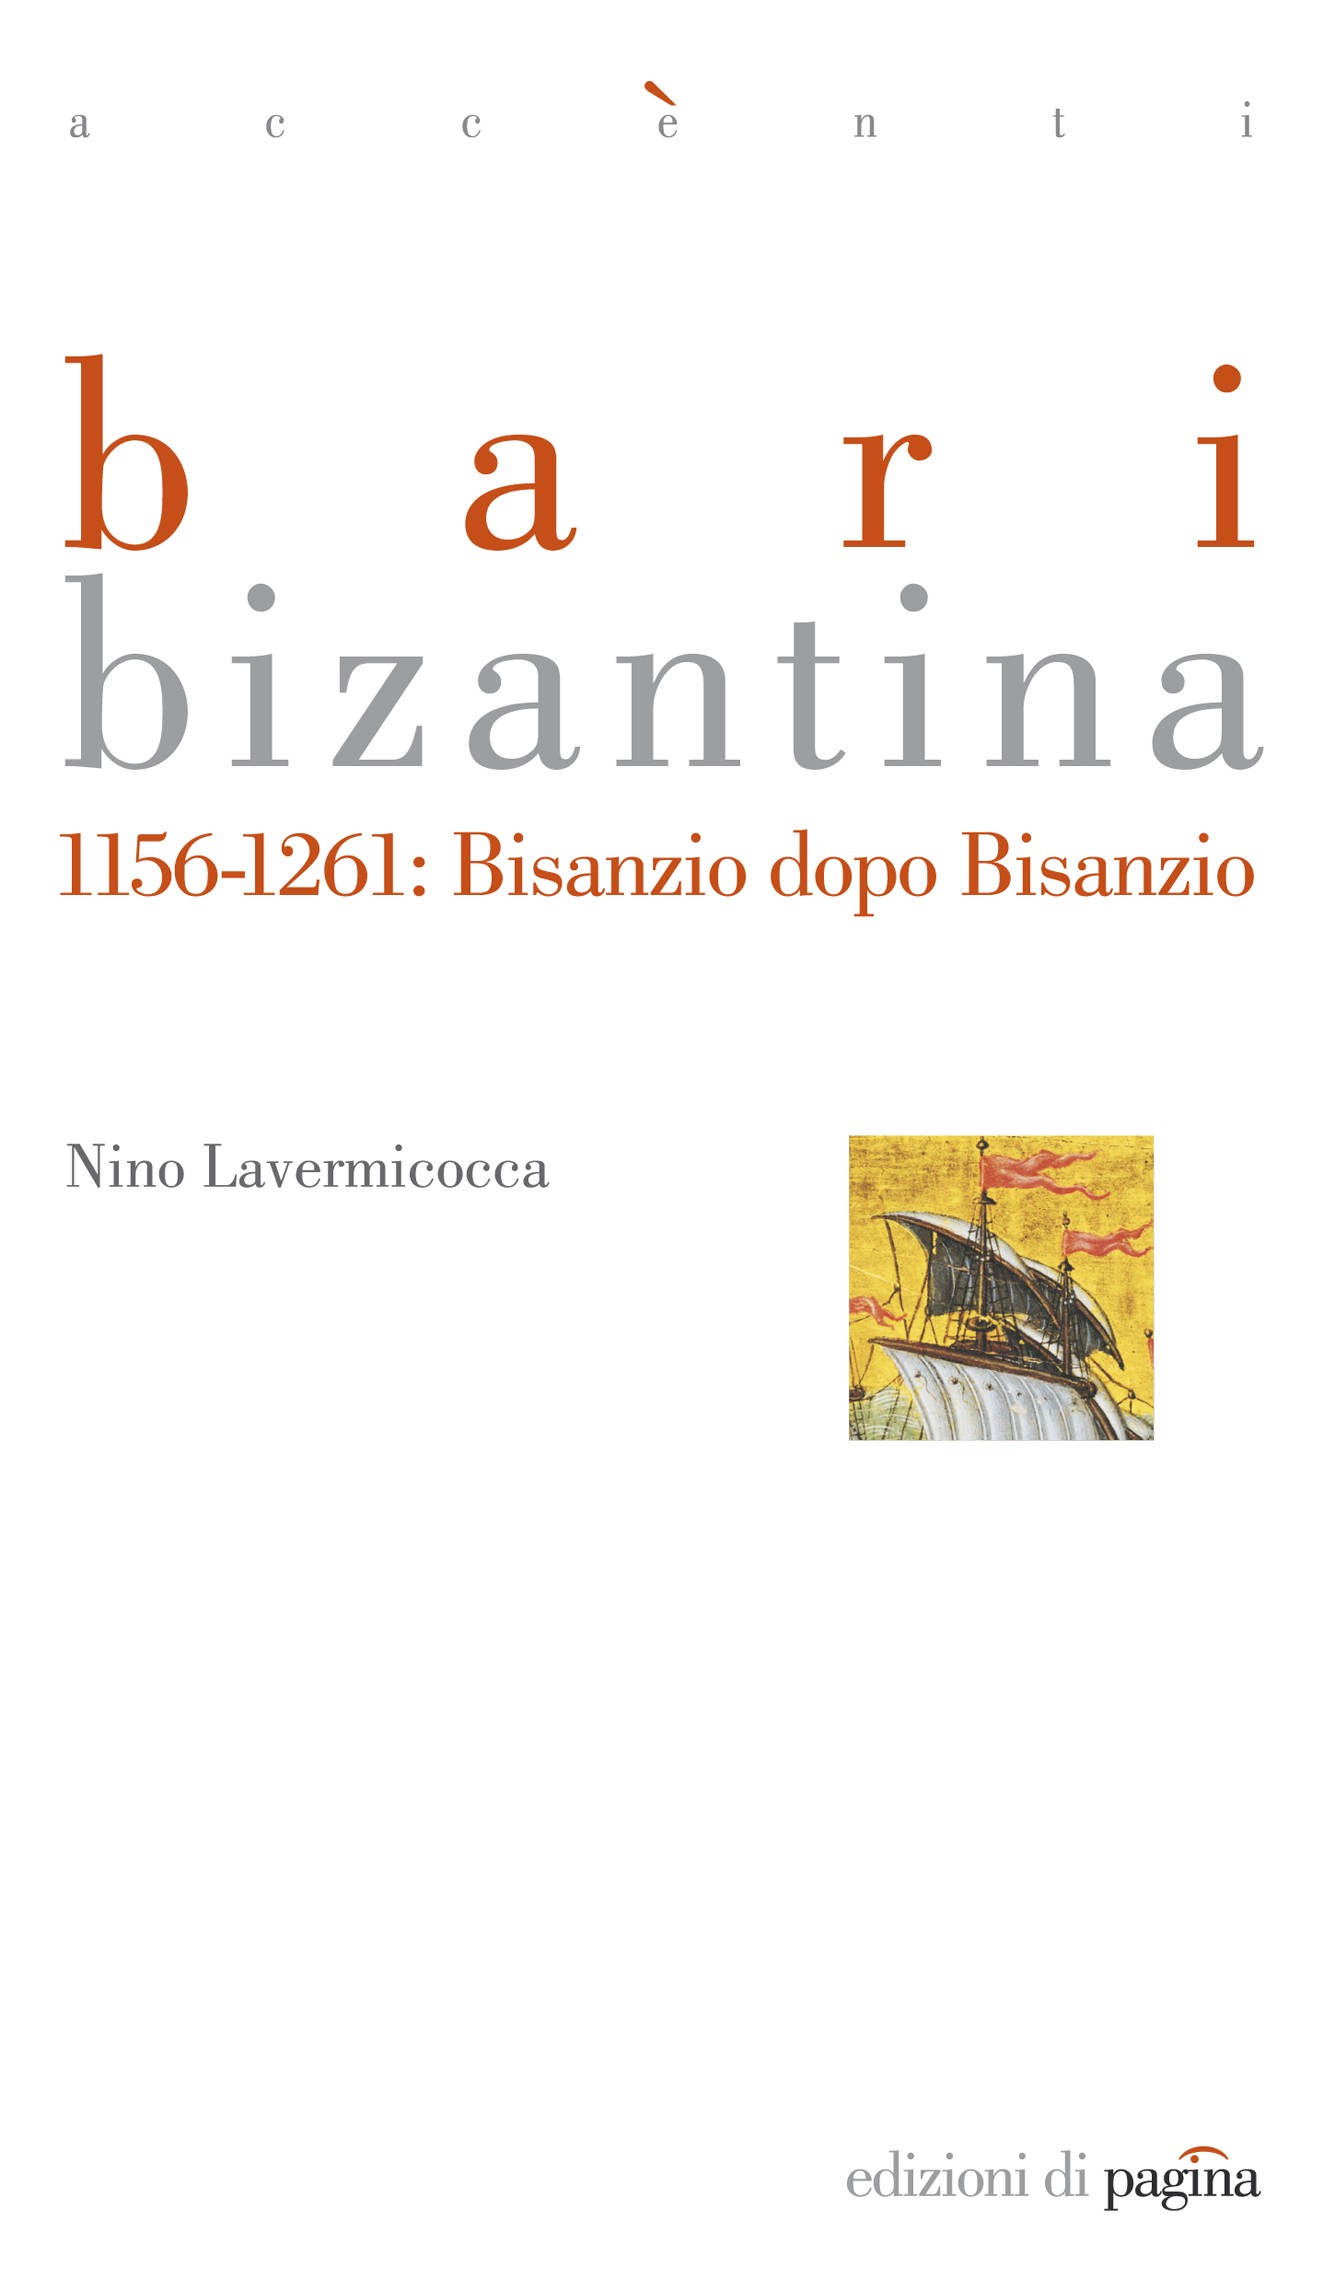 Bari bizantina. 1156-1261: Bisanzio dopo Bisanzio - Librerie.coop